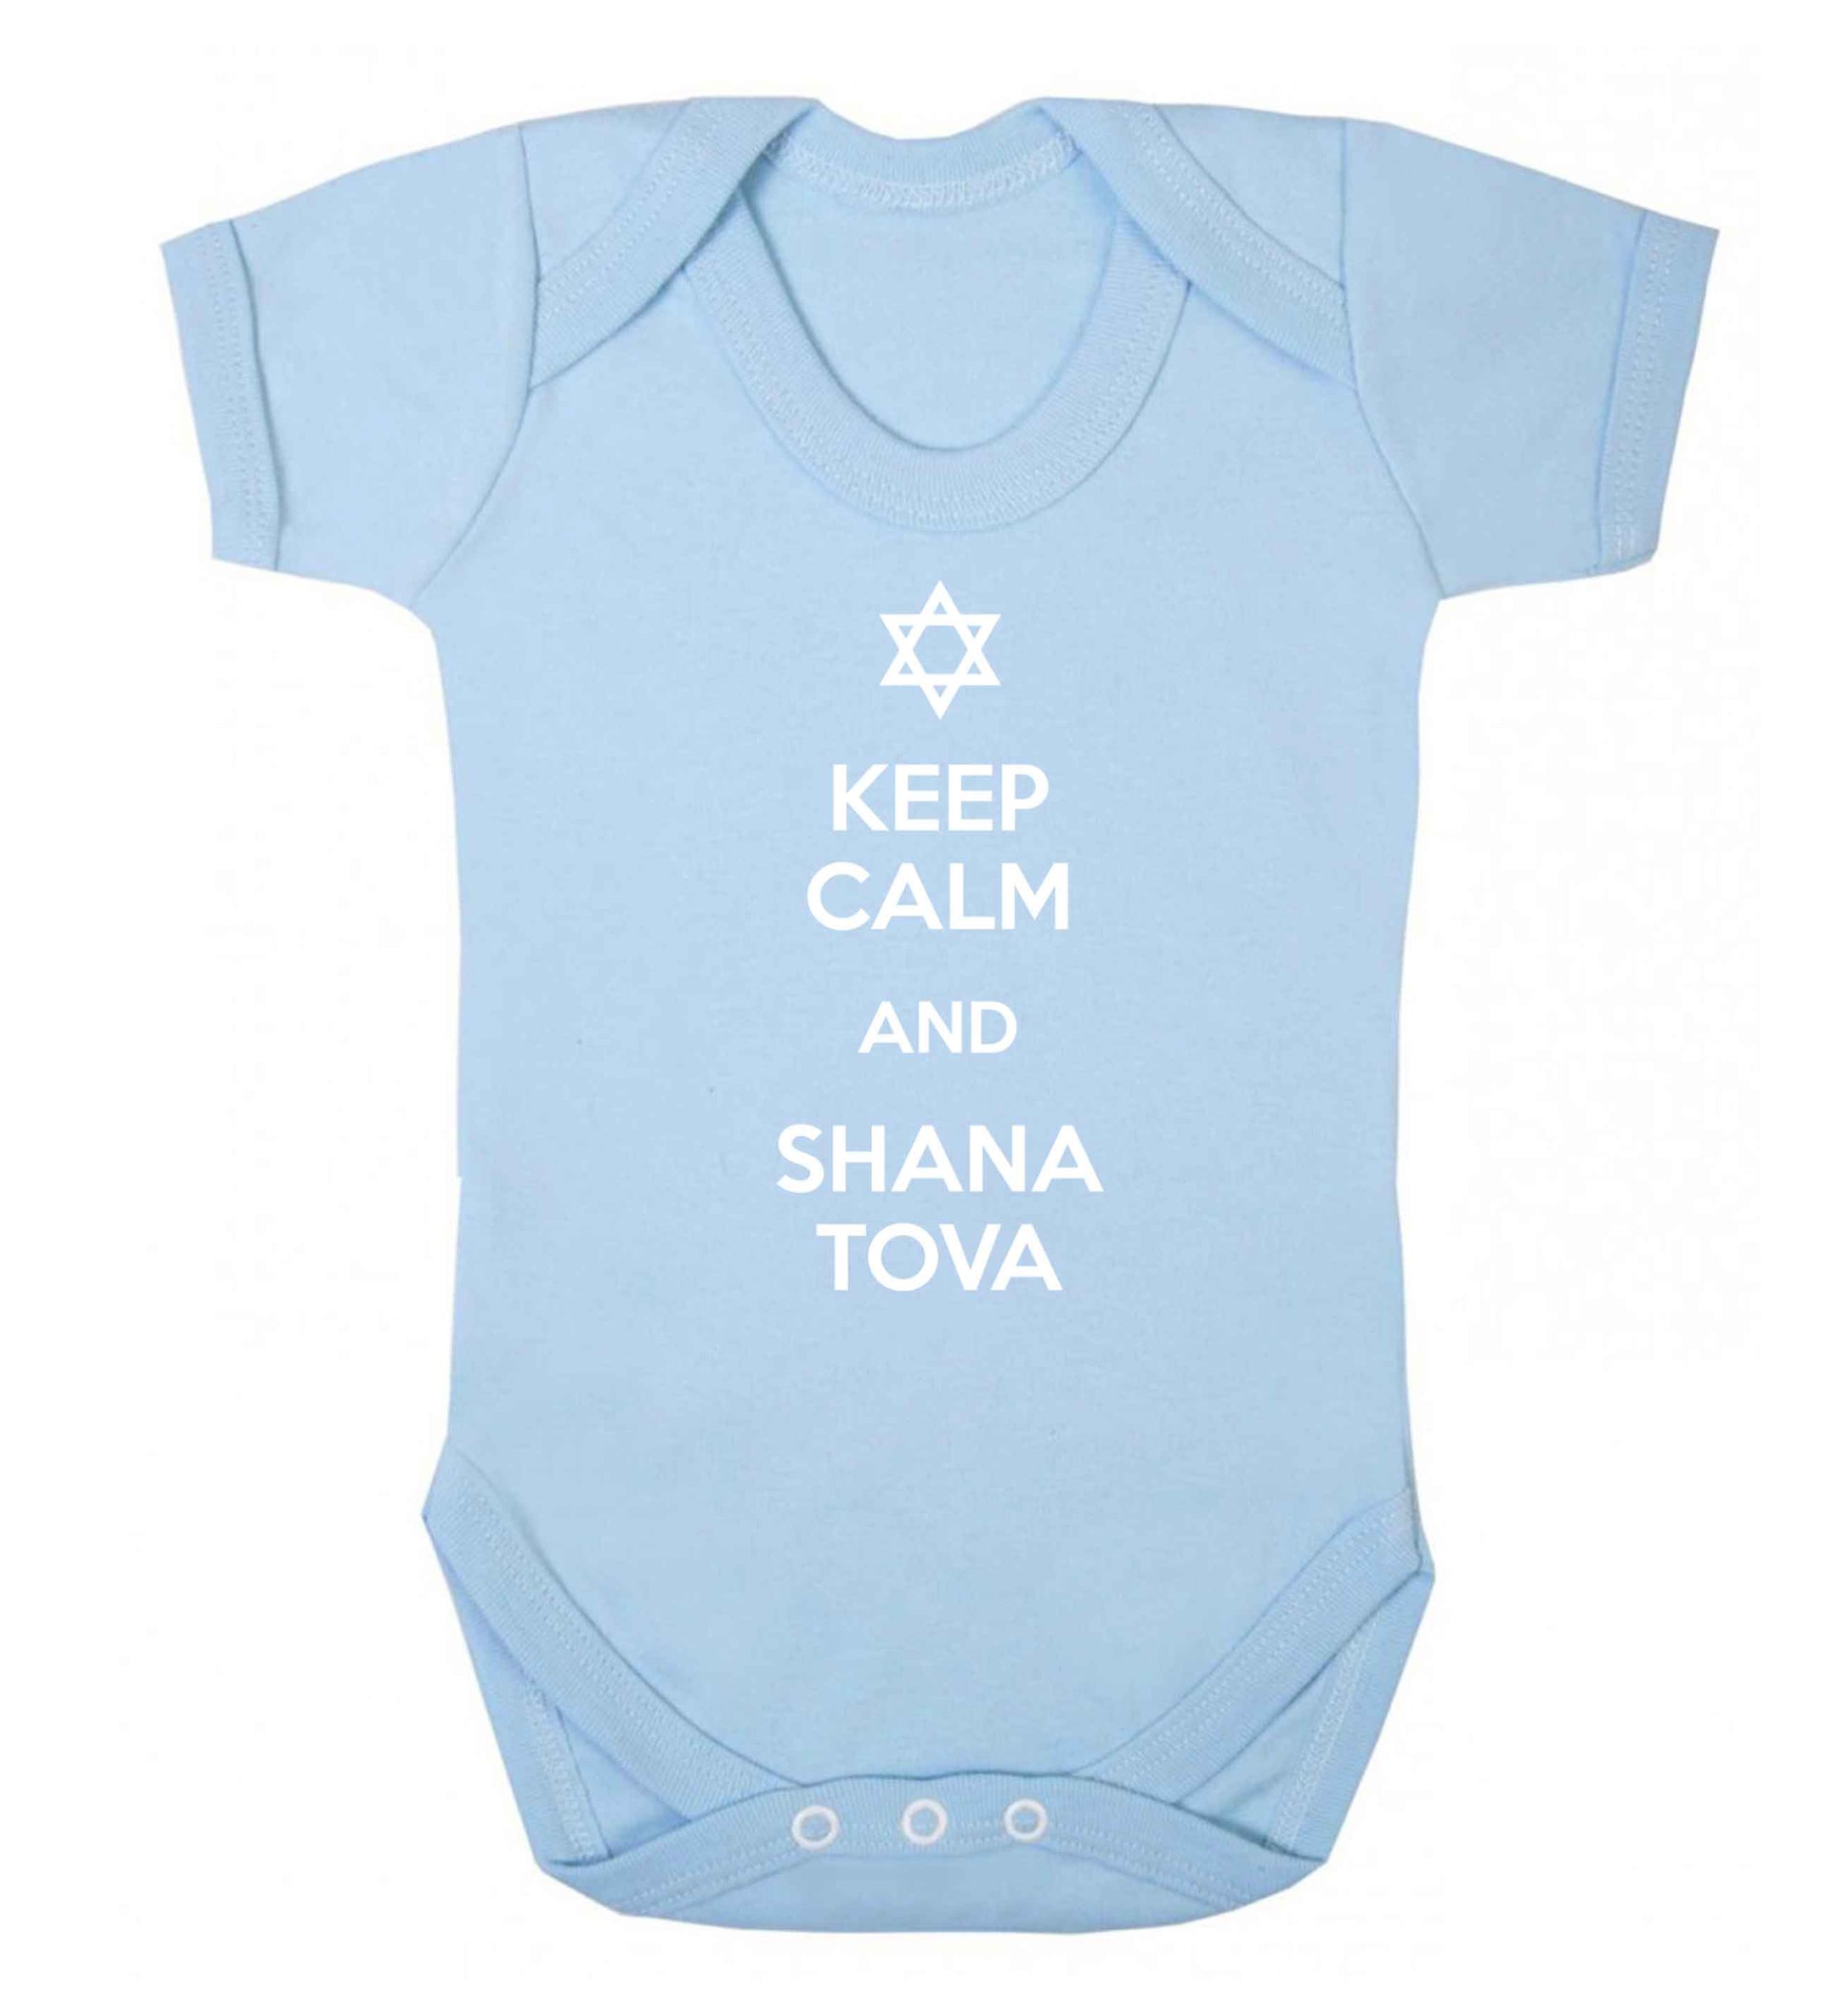 Keep calm and shana tova Baby Vest pale blue 18-24 months